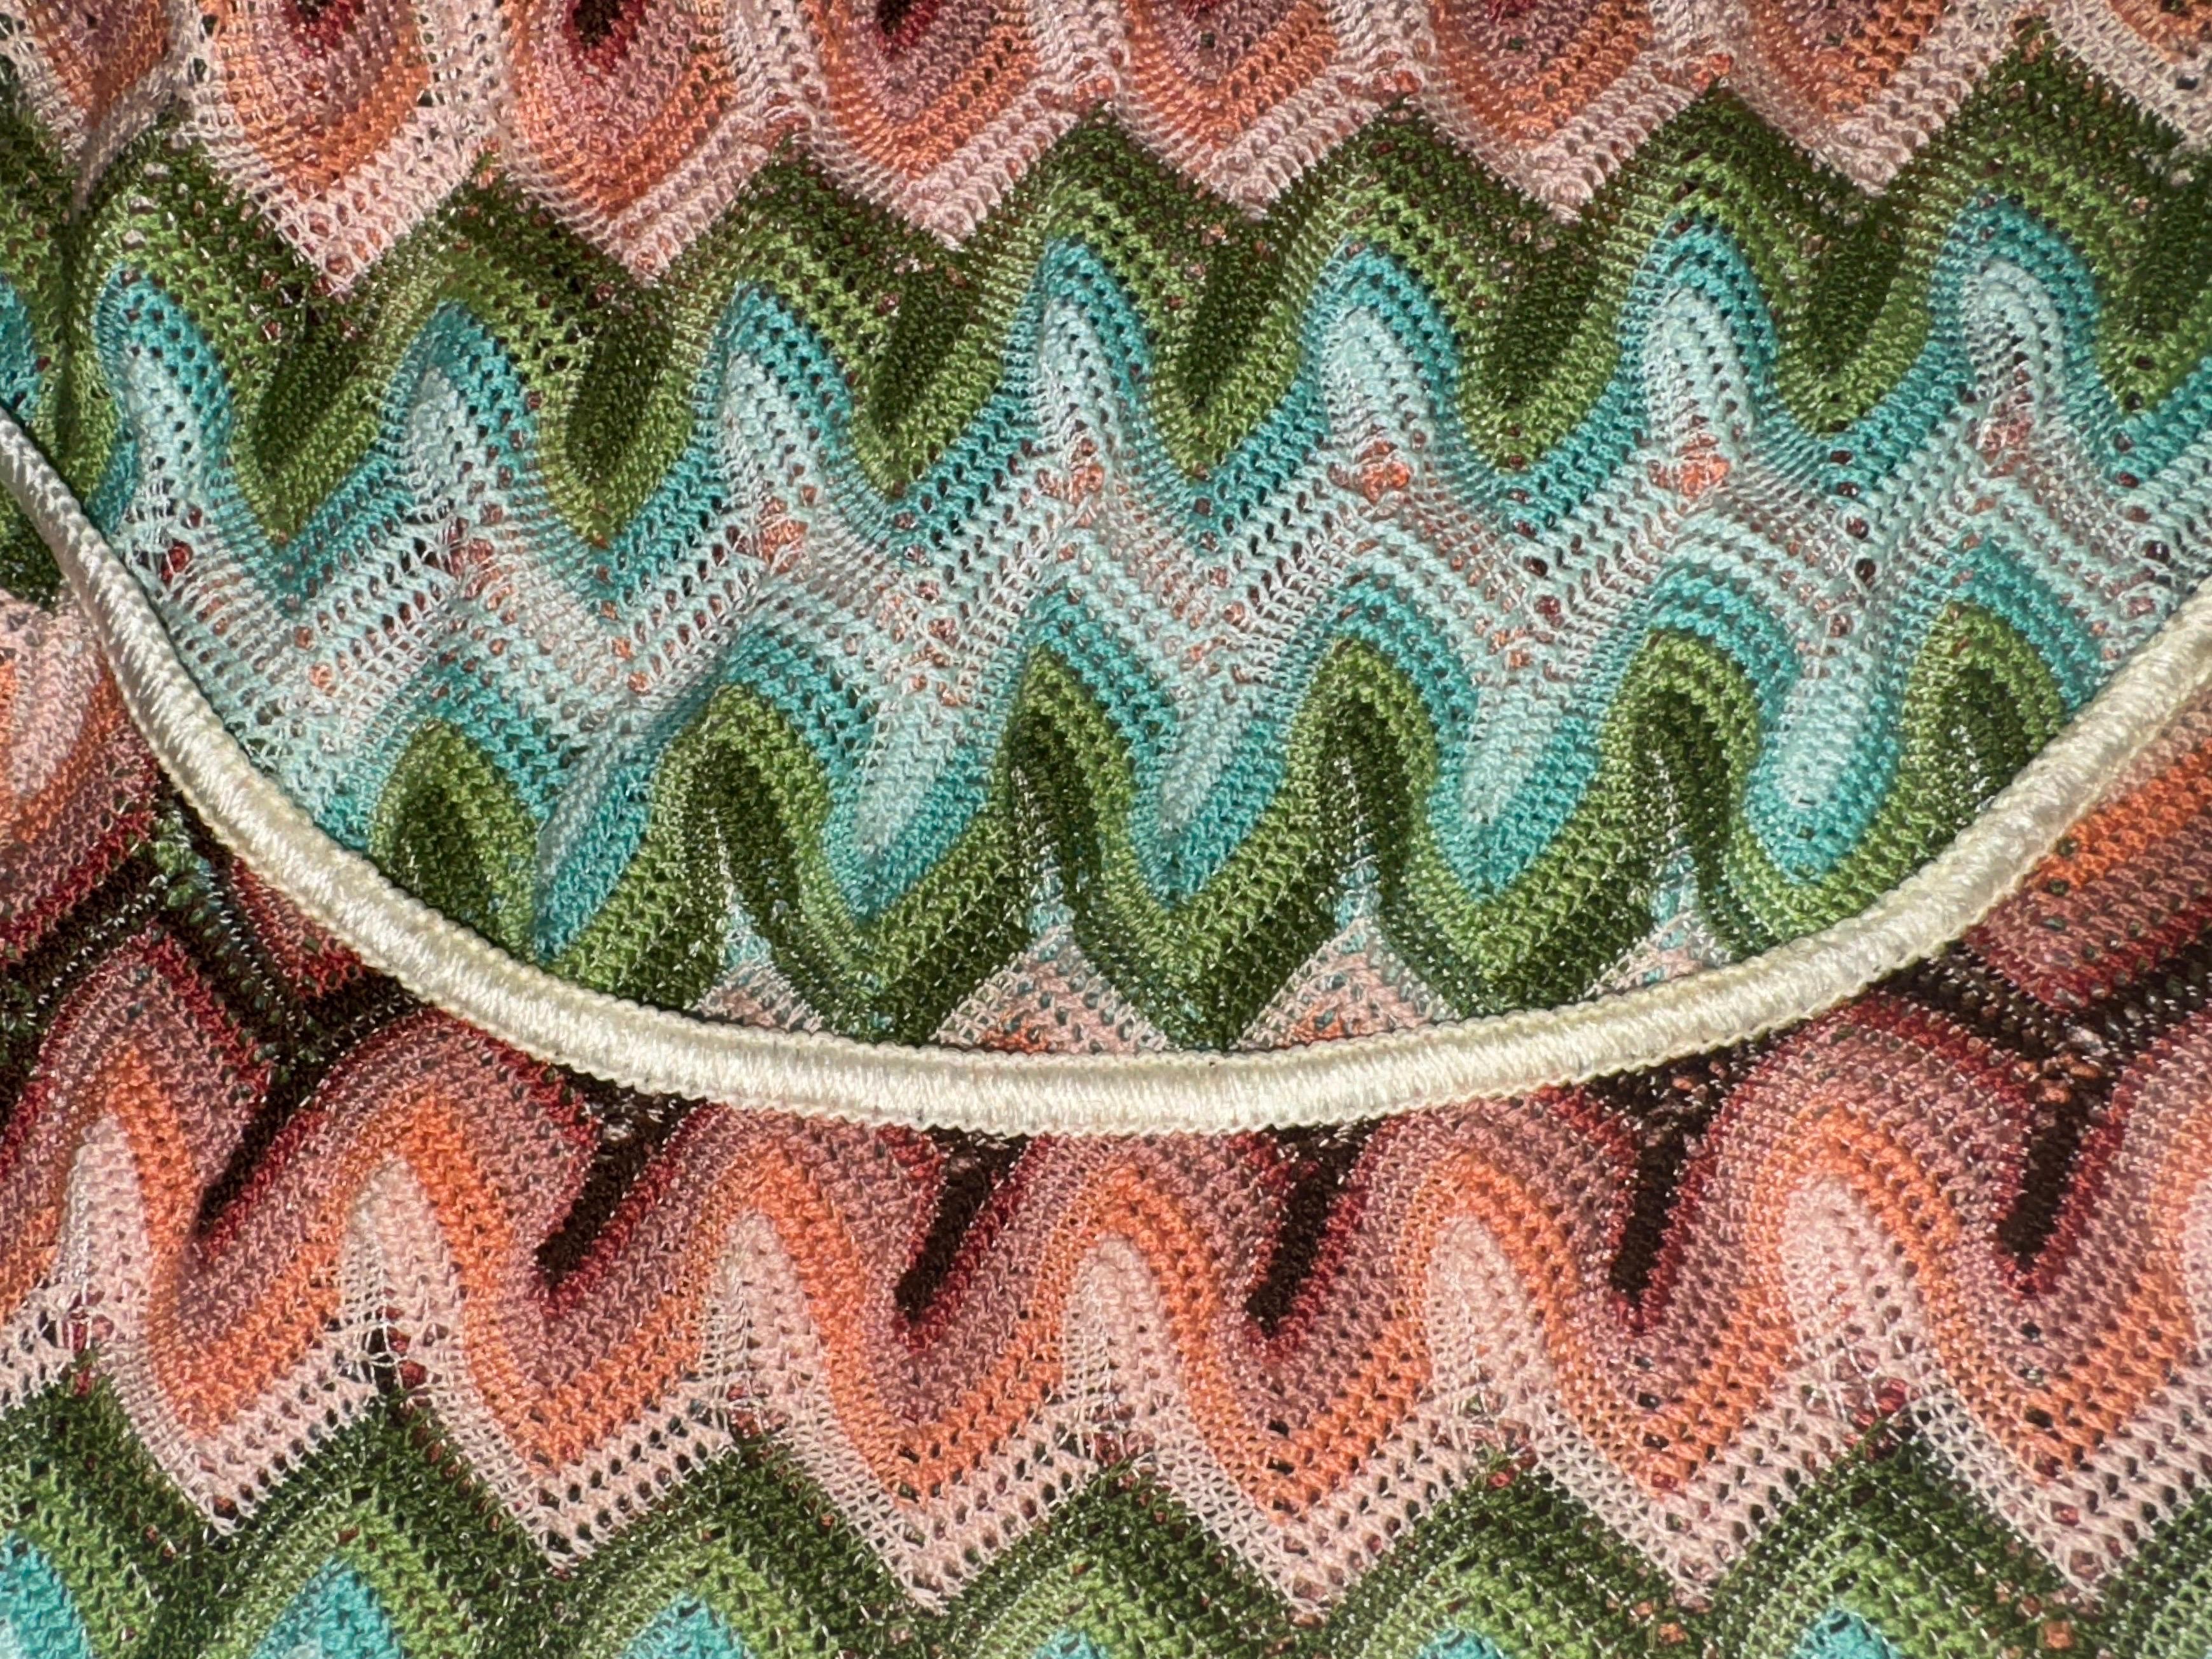 UNWORN Missoni Signature Crochet Knit Chevron Summer Dress 42 In Good Condition For Sale In Switzerland, CH